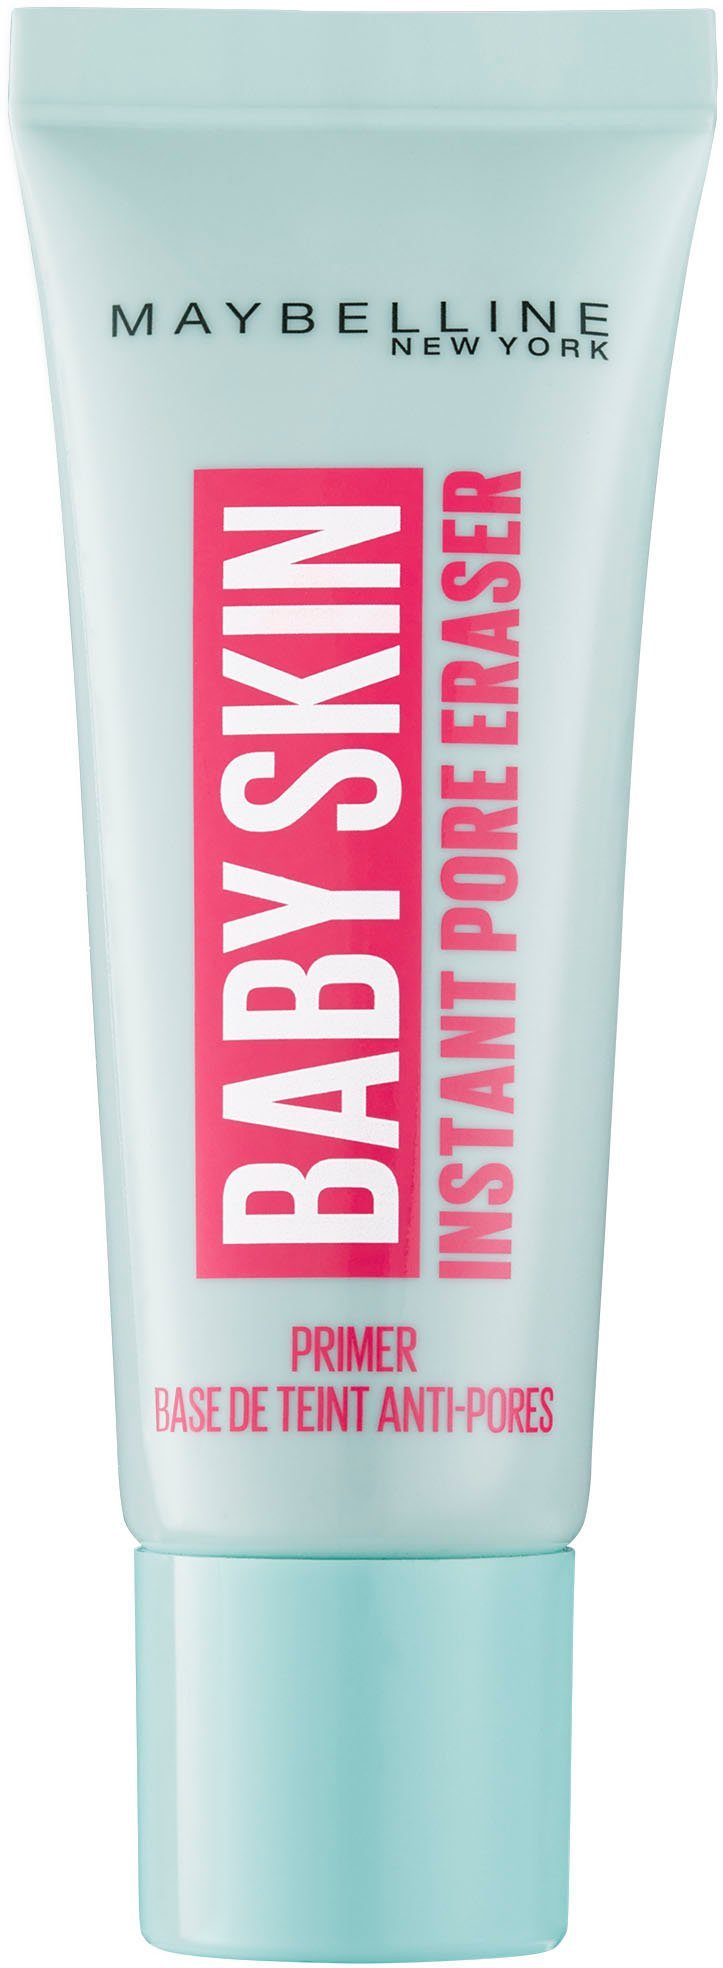 Primer YORK NEW Baby MAYBELLINE Skin